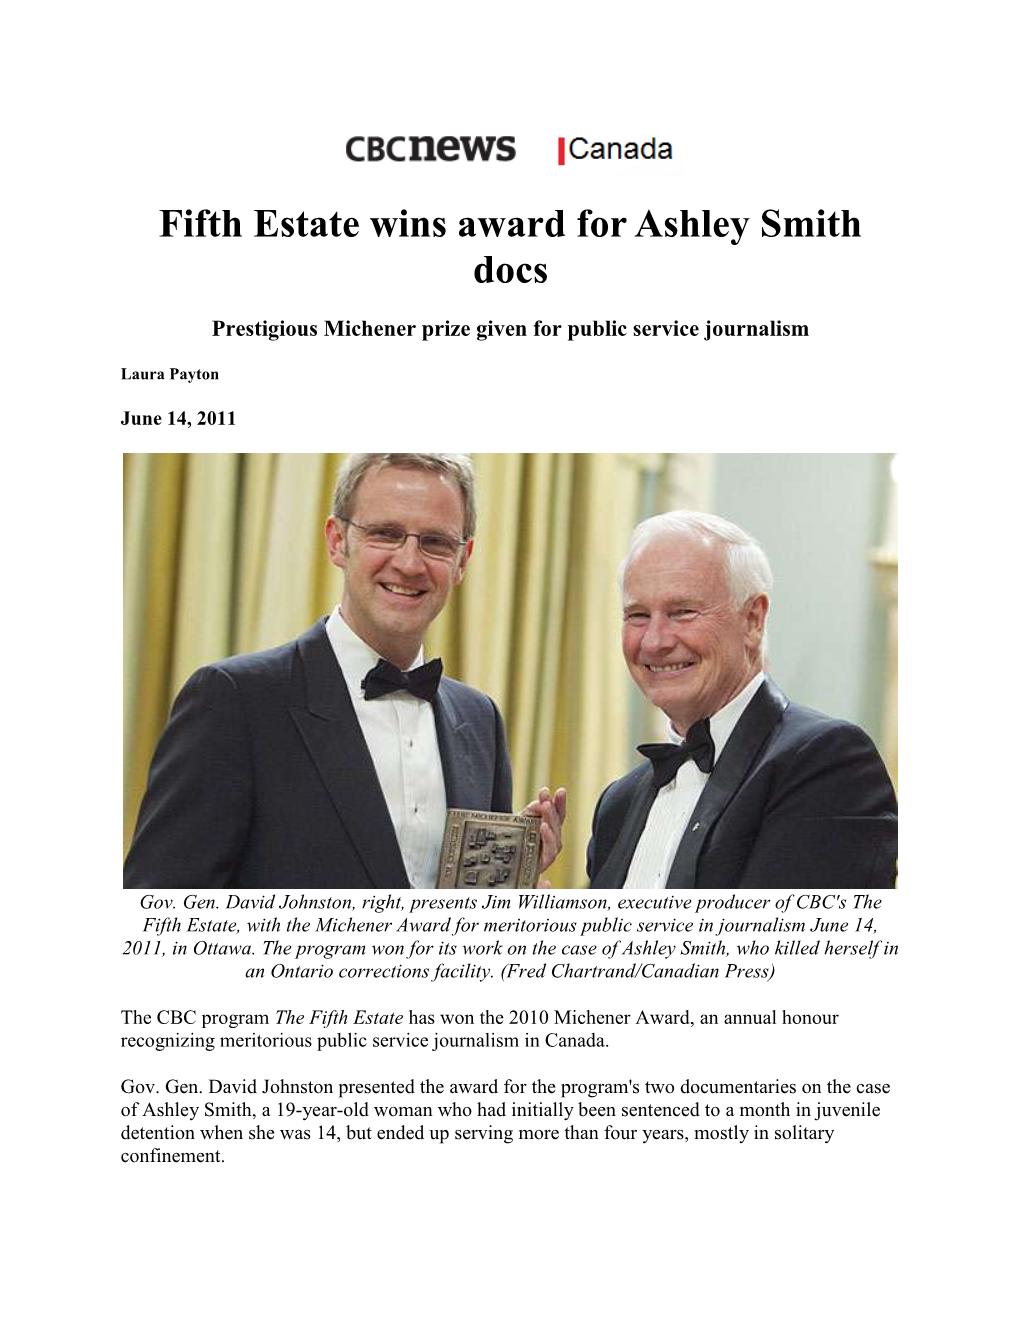 Fifth Estate Wins Award for Ashley Smith Docs